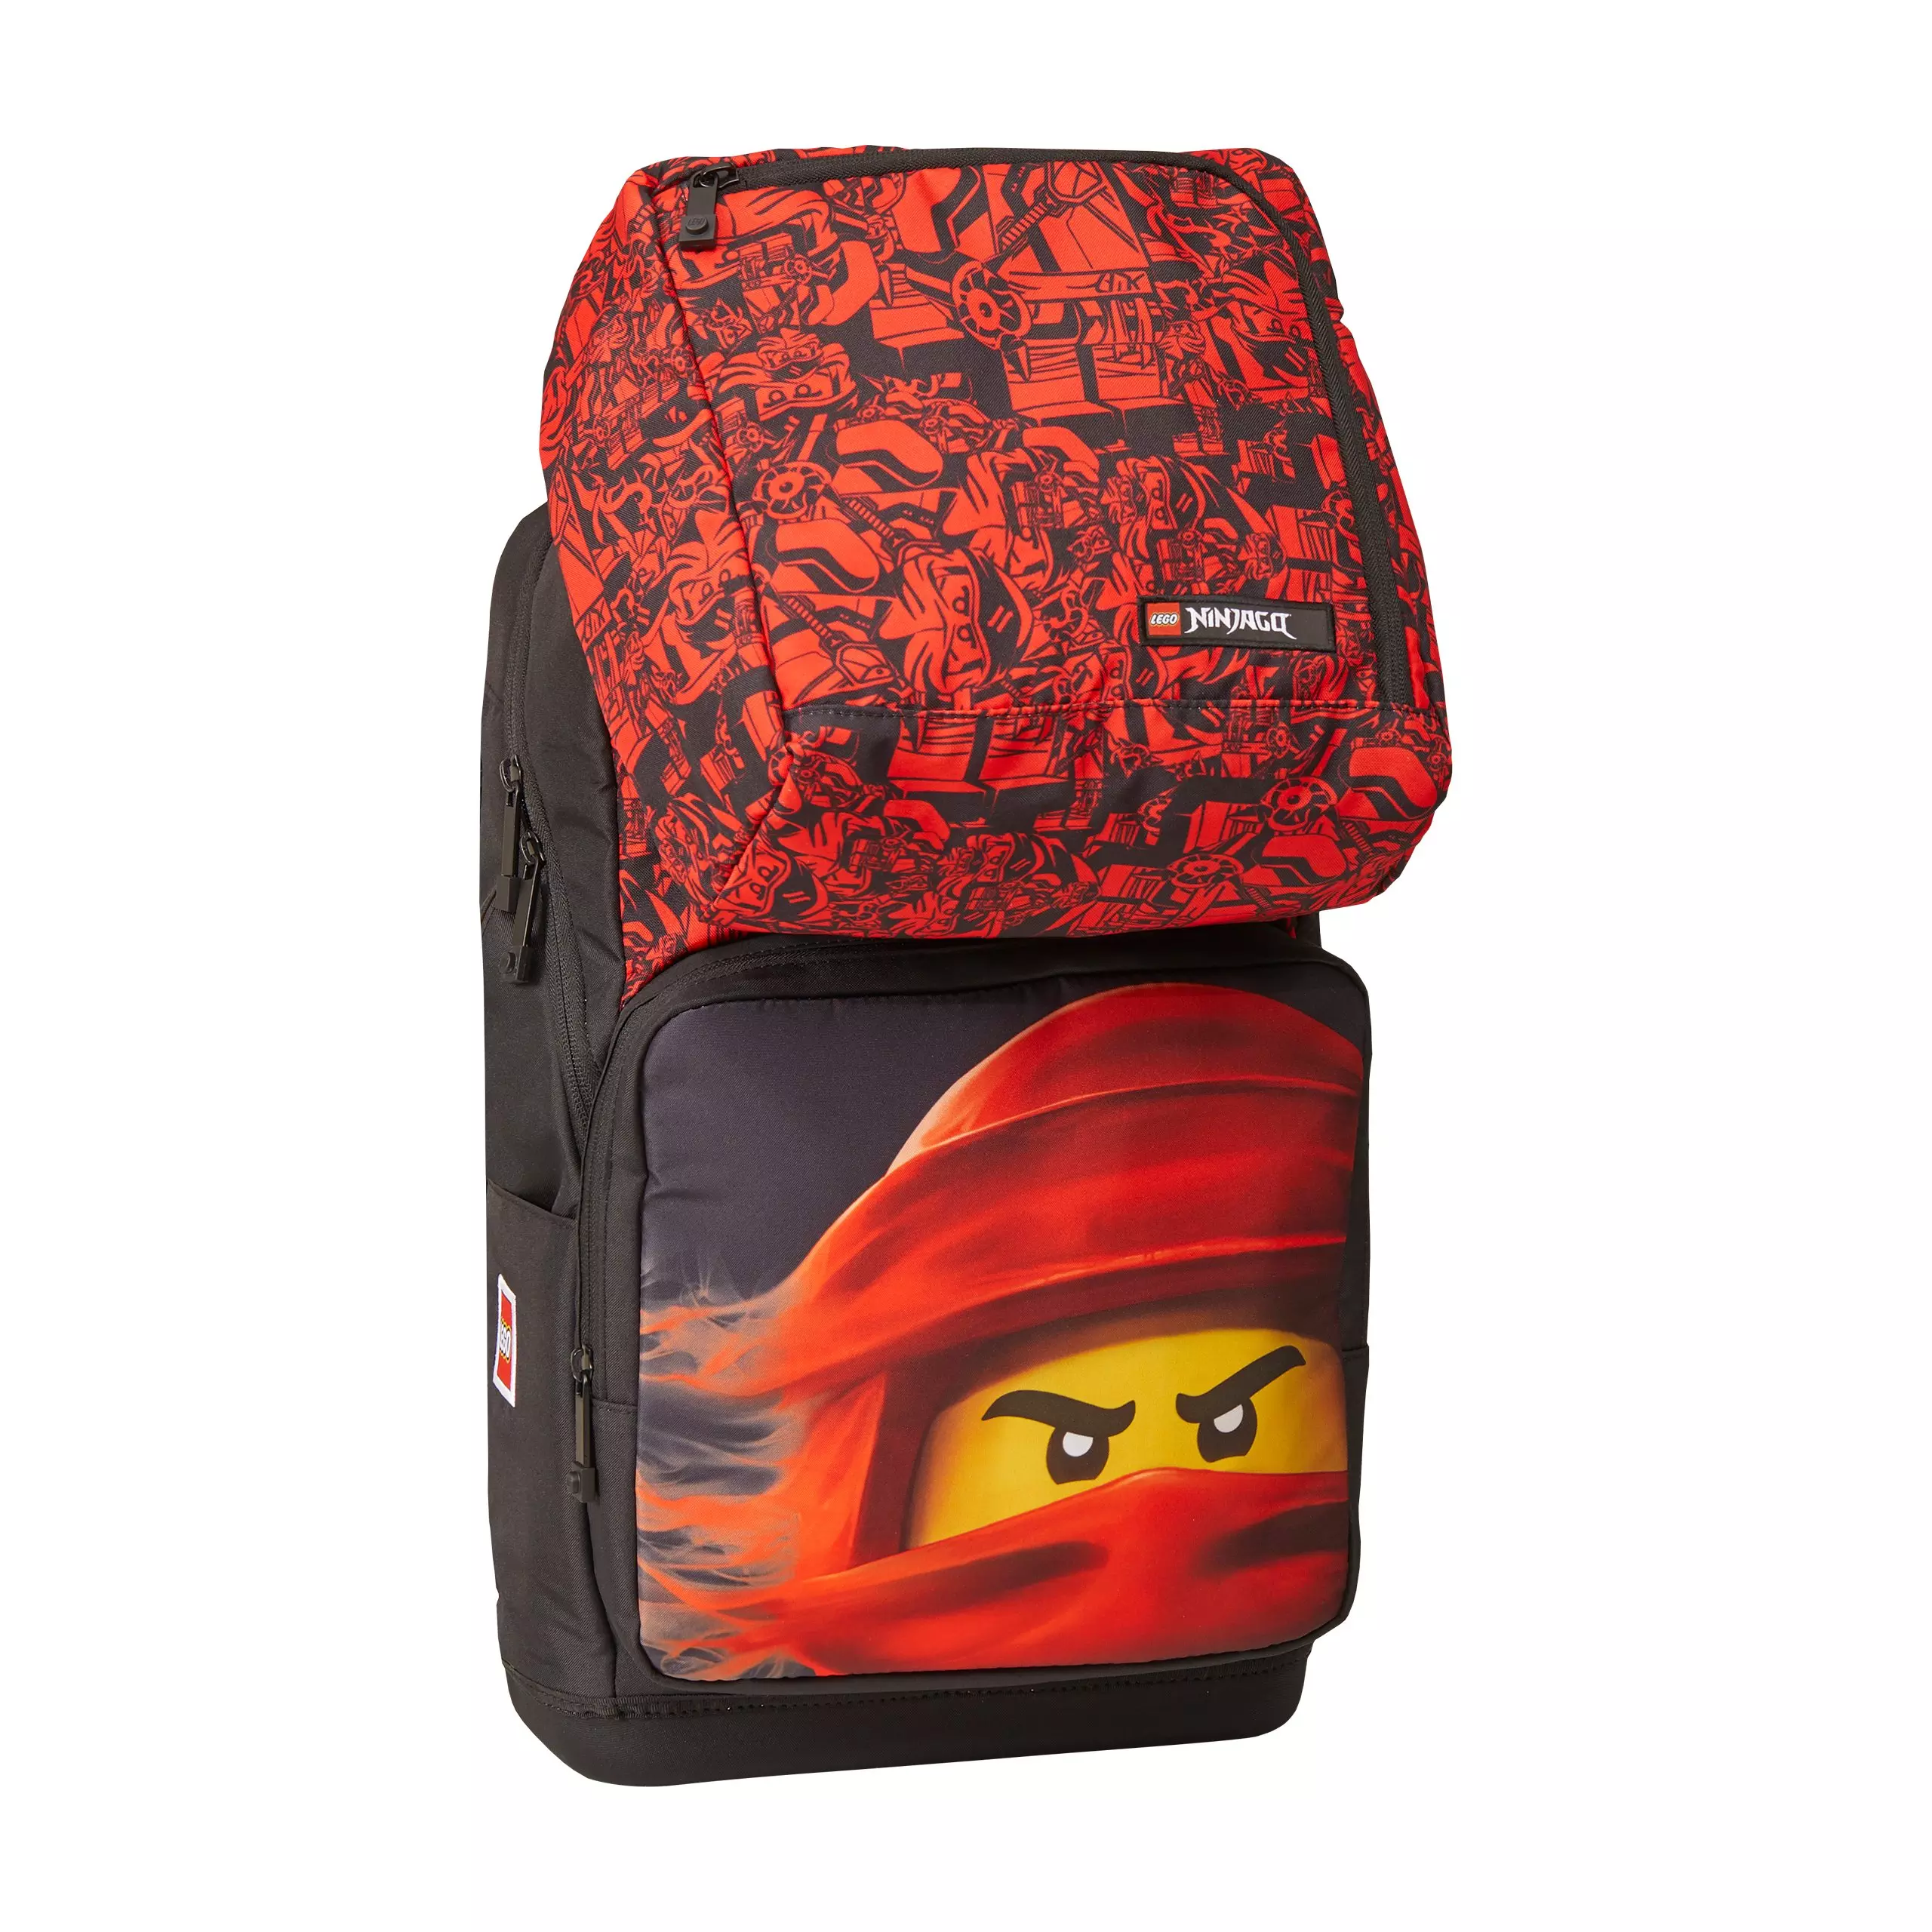 Lego Optimo Plus School Bag Ninjago